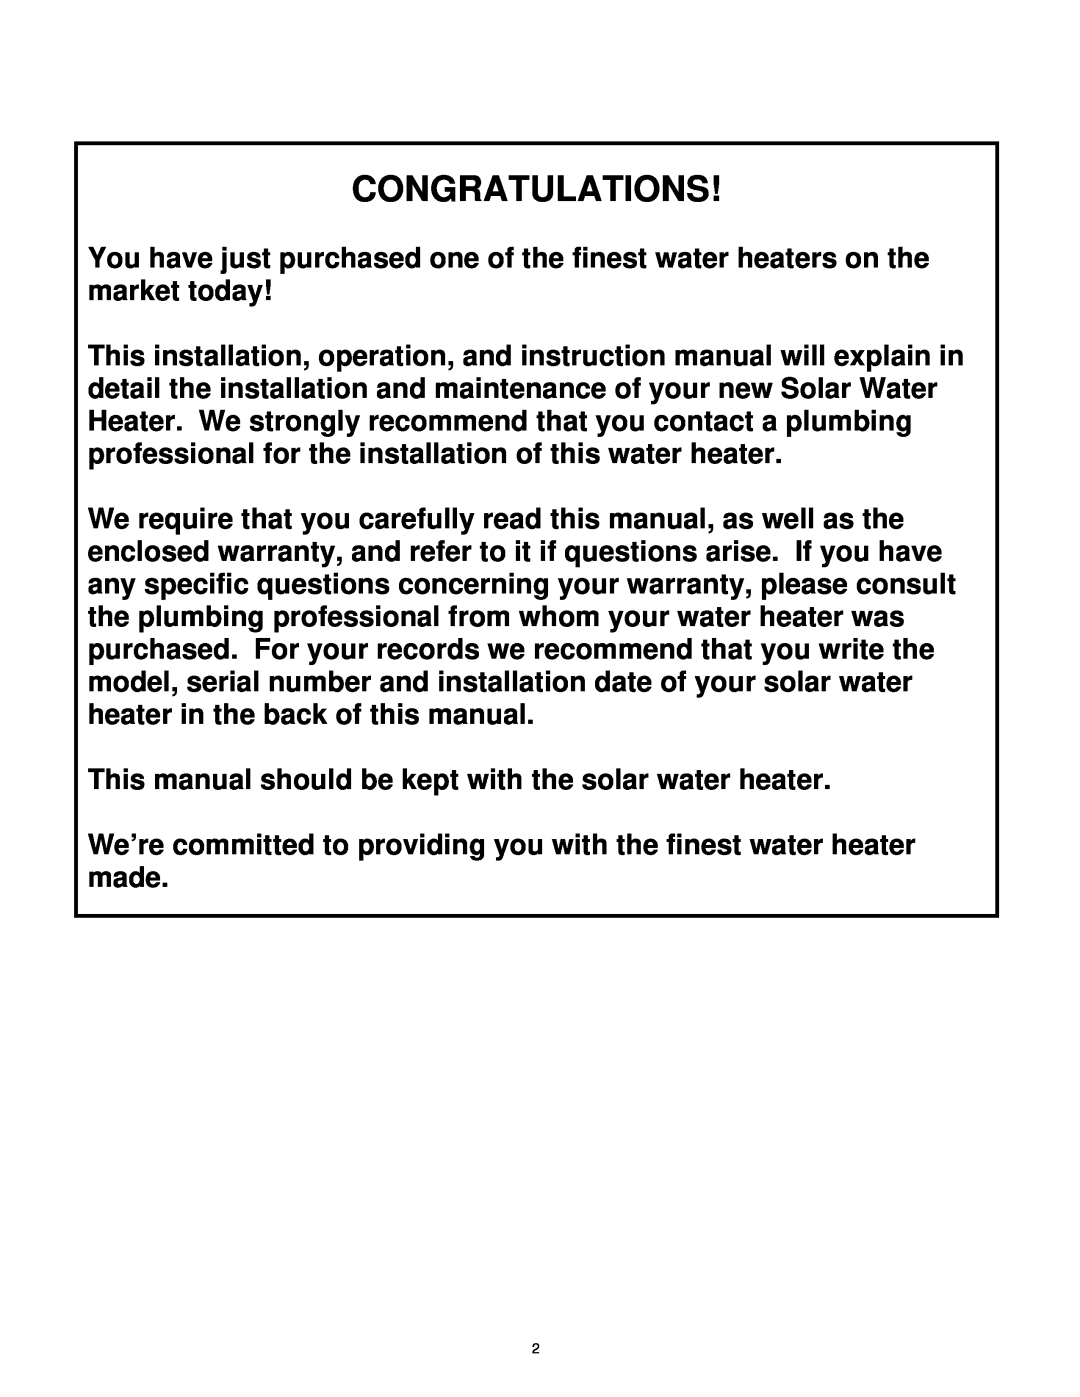 Bradford-White Corp Solar Water Heater manual Congratulations 